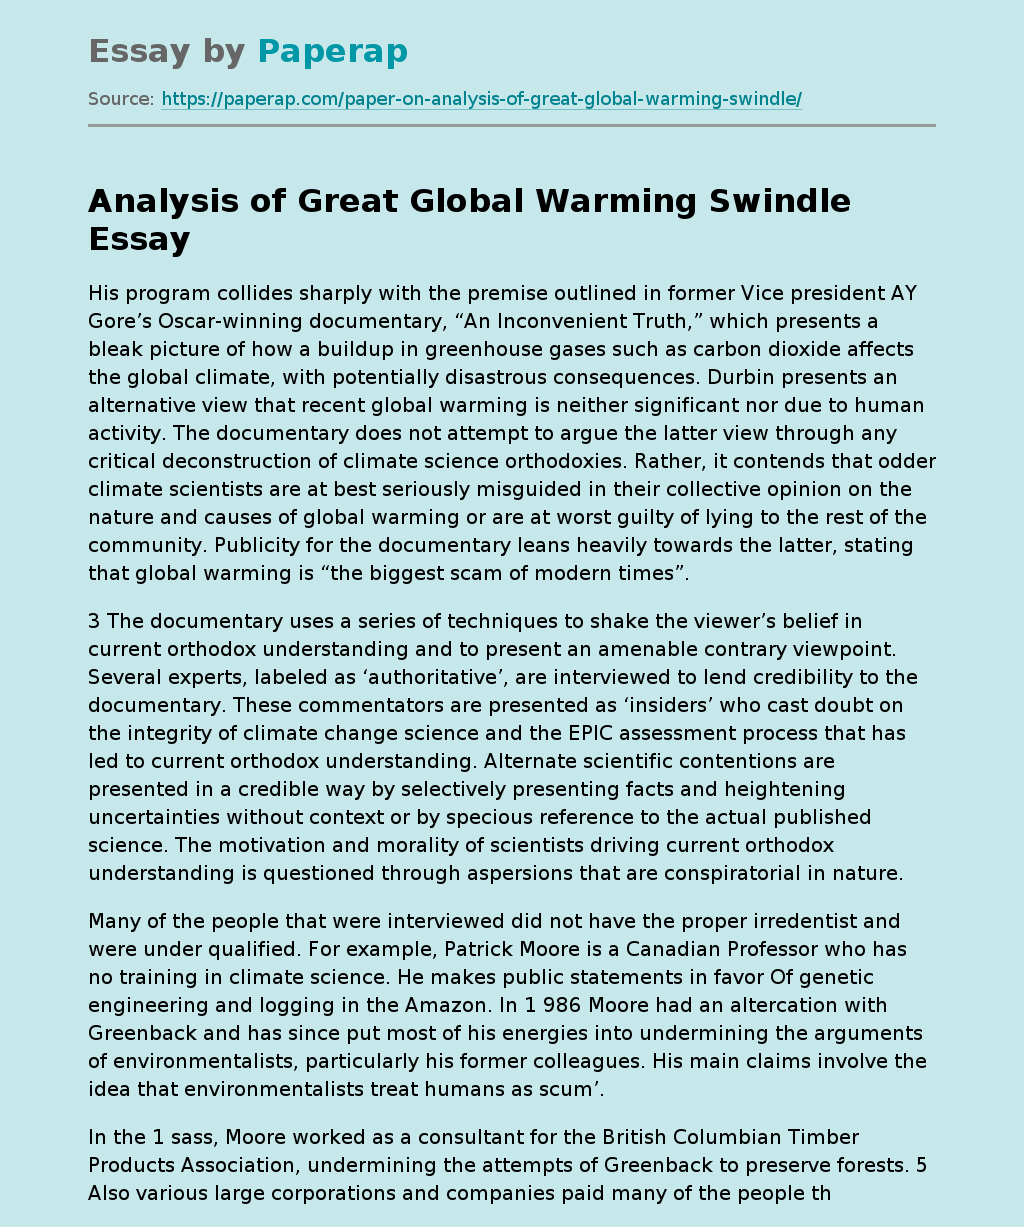 Analysis of Great Global Warming Swindle